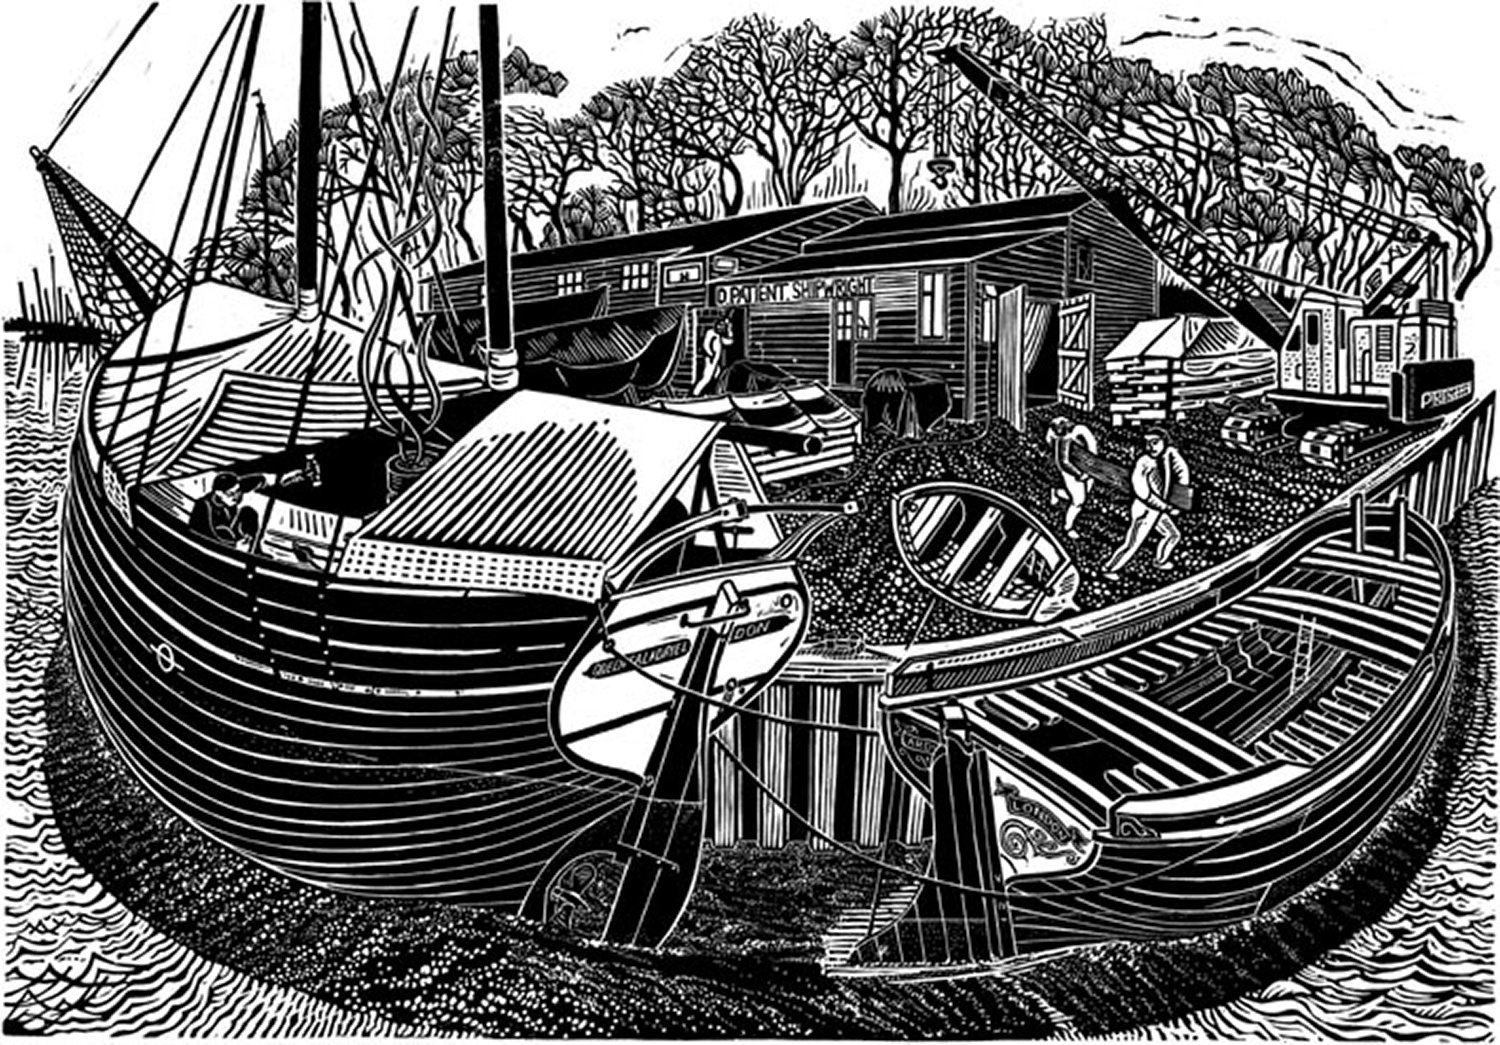 Shipwrights Yard by James Dodds